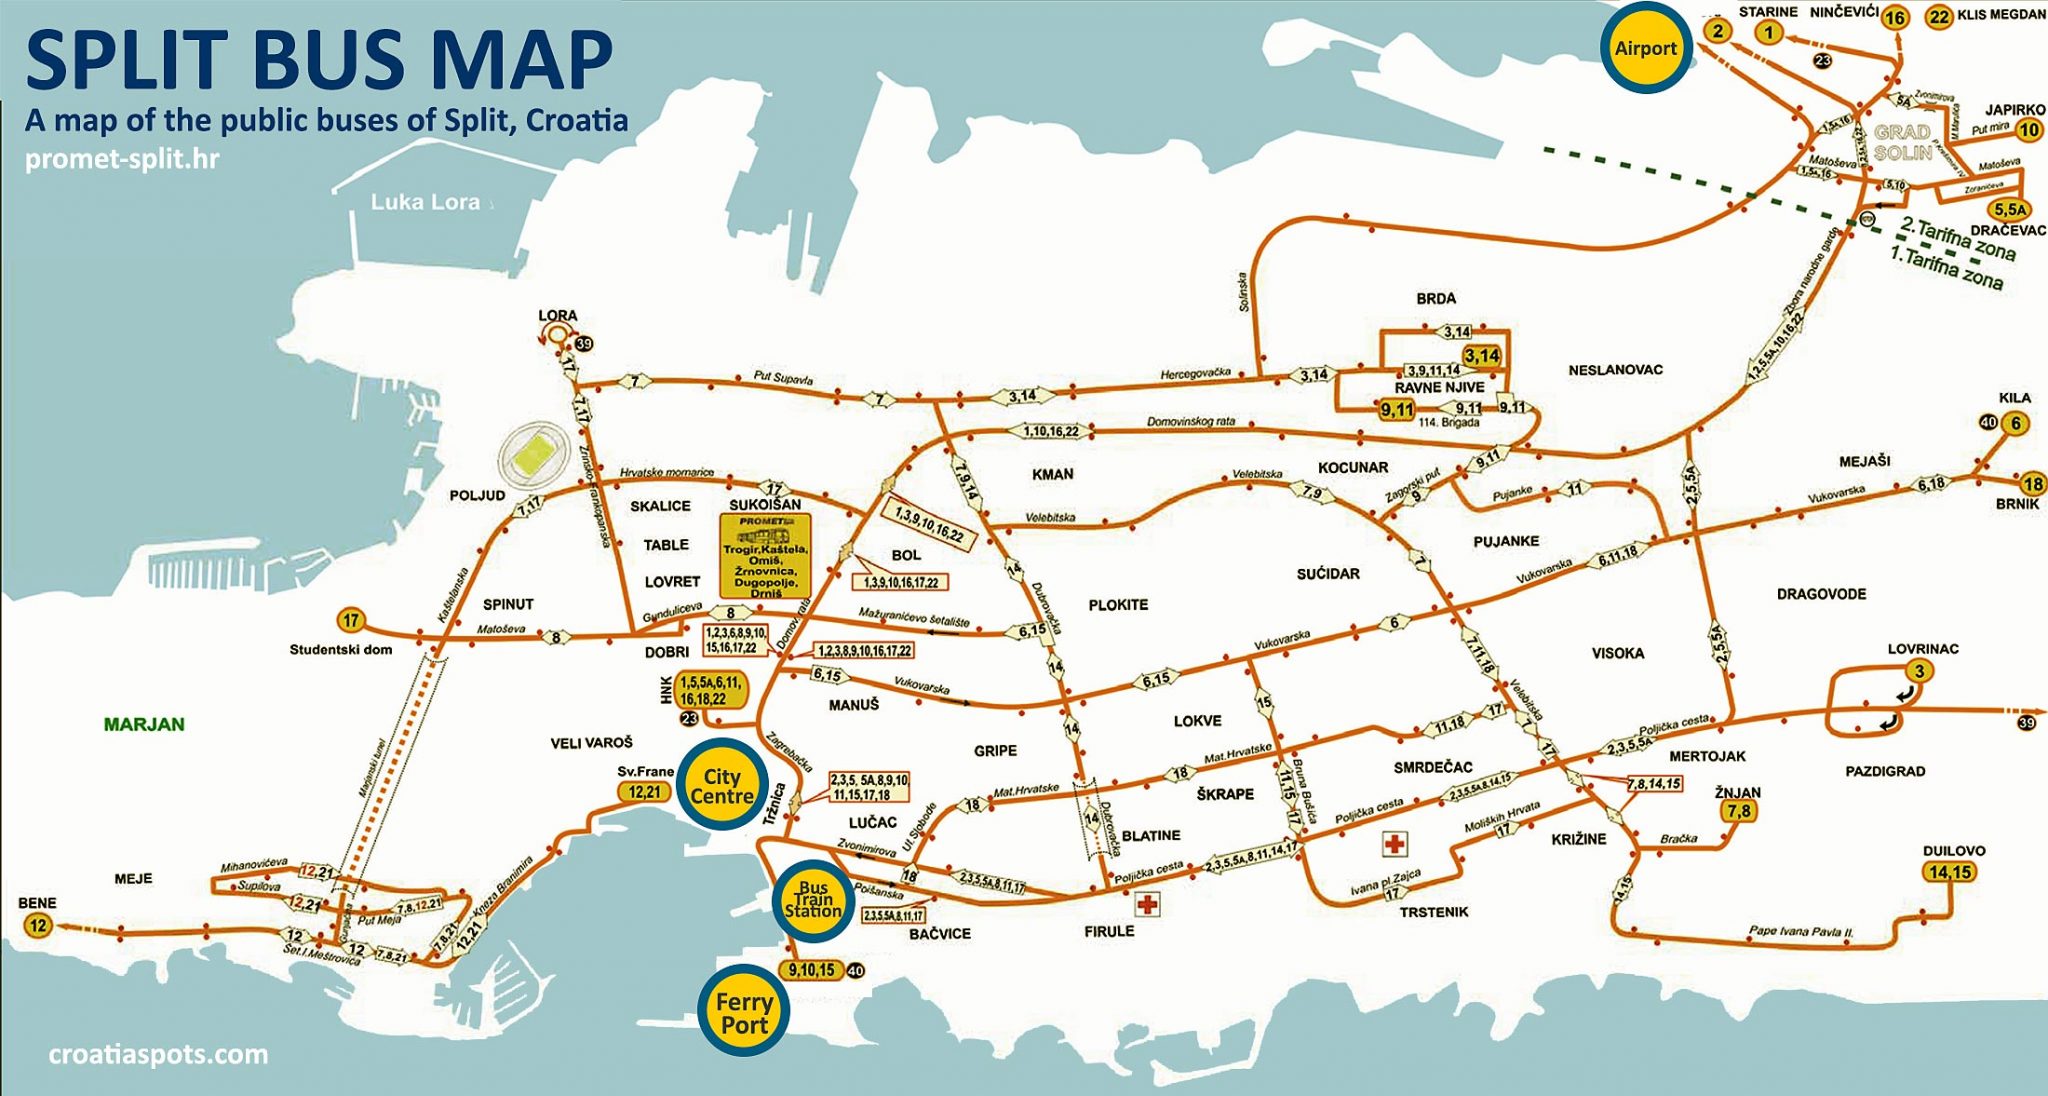 Split Bus Map - CroatiaSpots